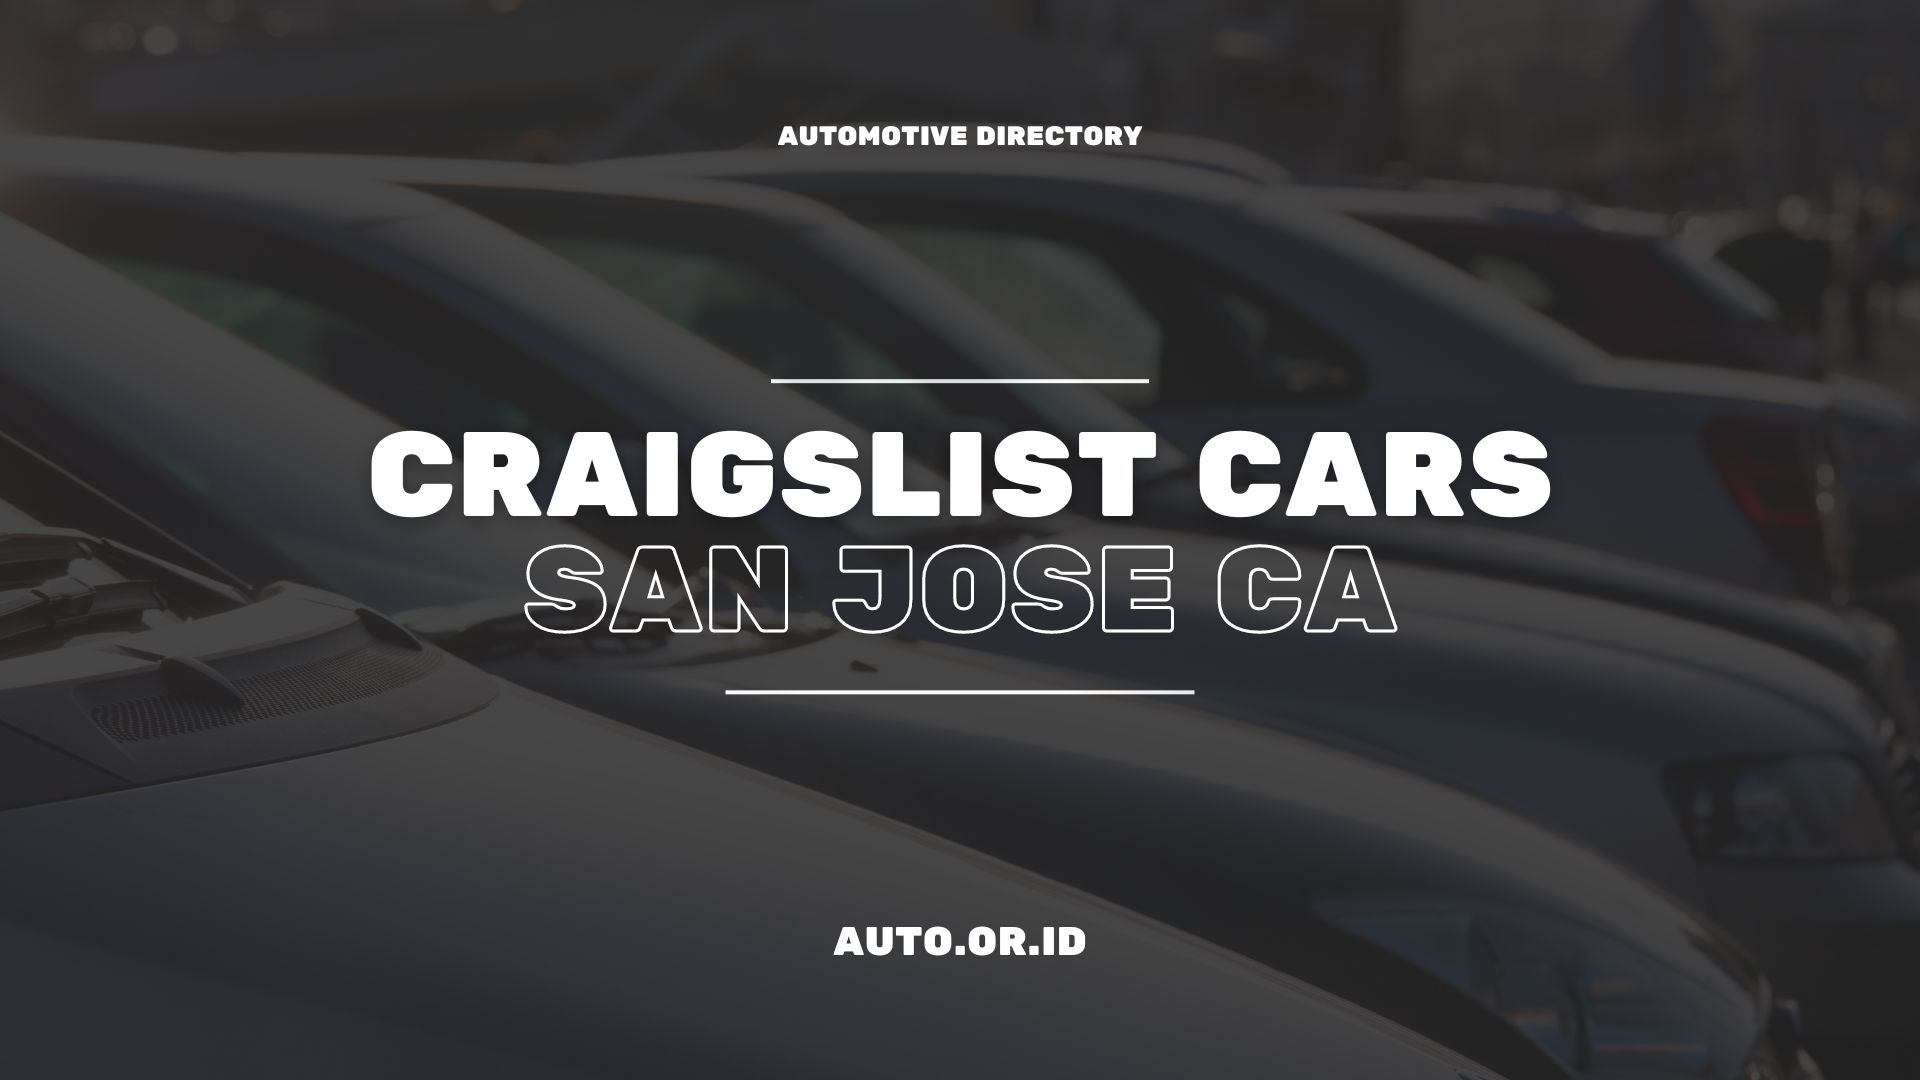 anjelica armstrong recommends Www Craigslist Com San Jose